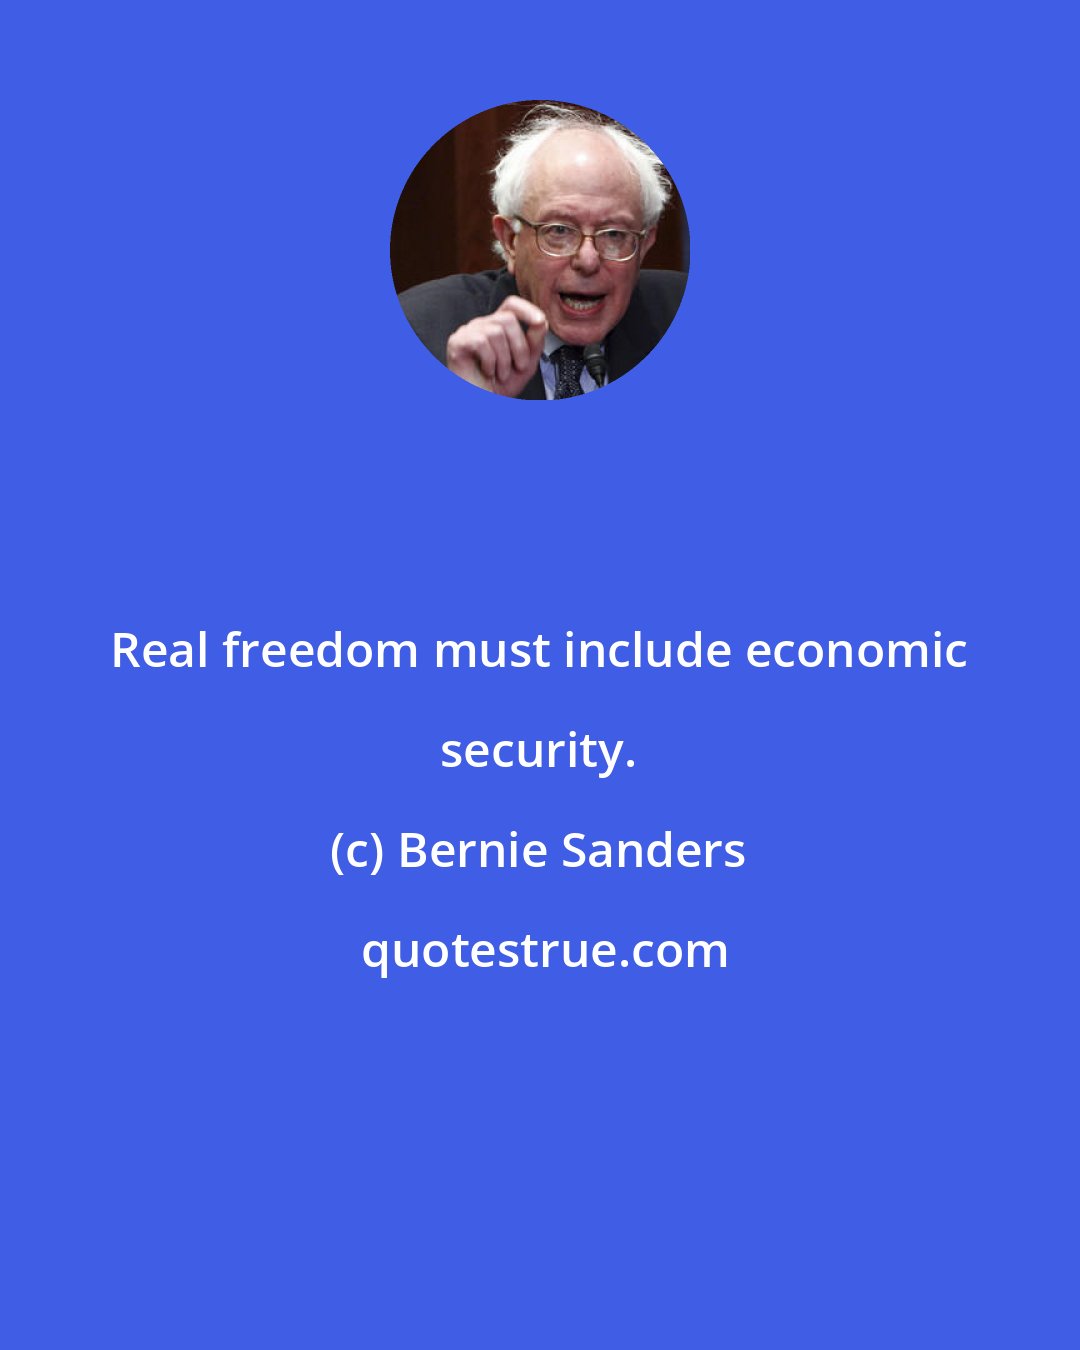 Bernie Sanders: Real freedom must include economic security.